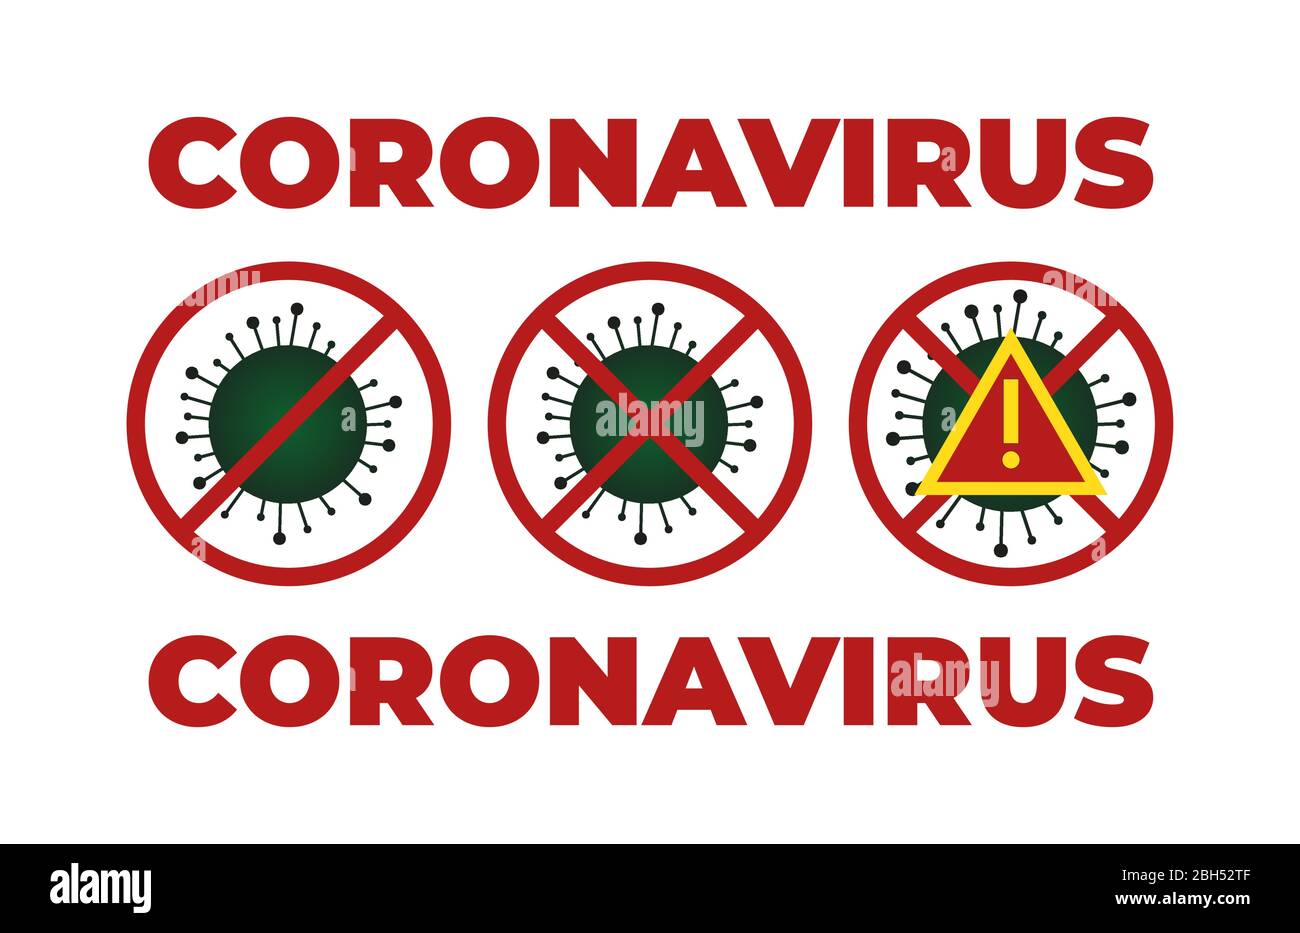 Illustrationen Konzept Coronavirus COVID-19. Virus wuhan aus china. Vektor illustrieren. Stock Vektor